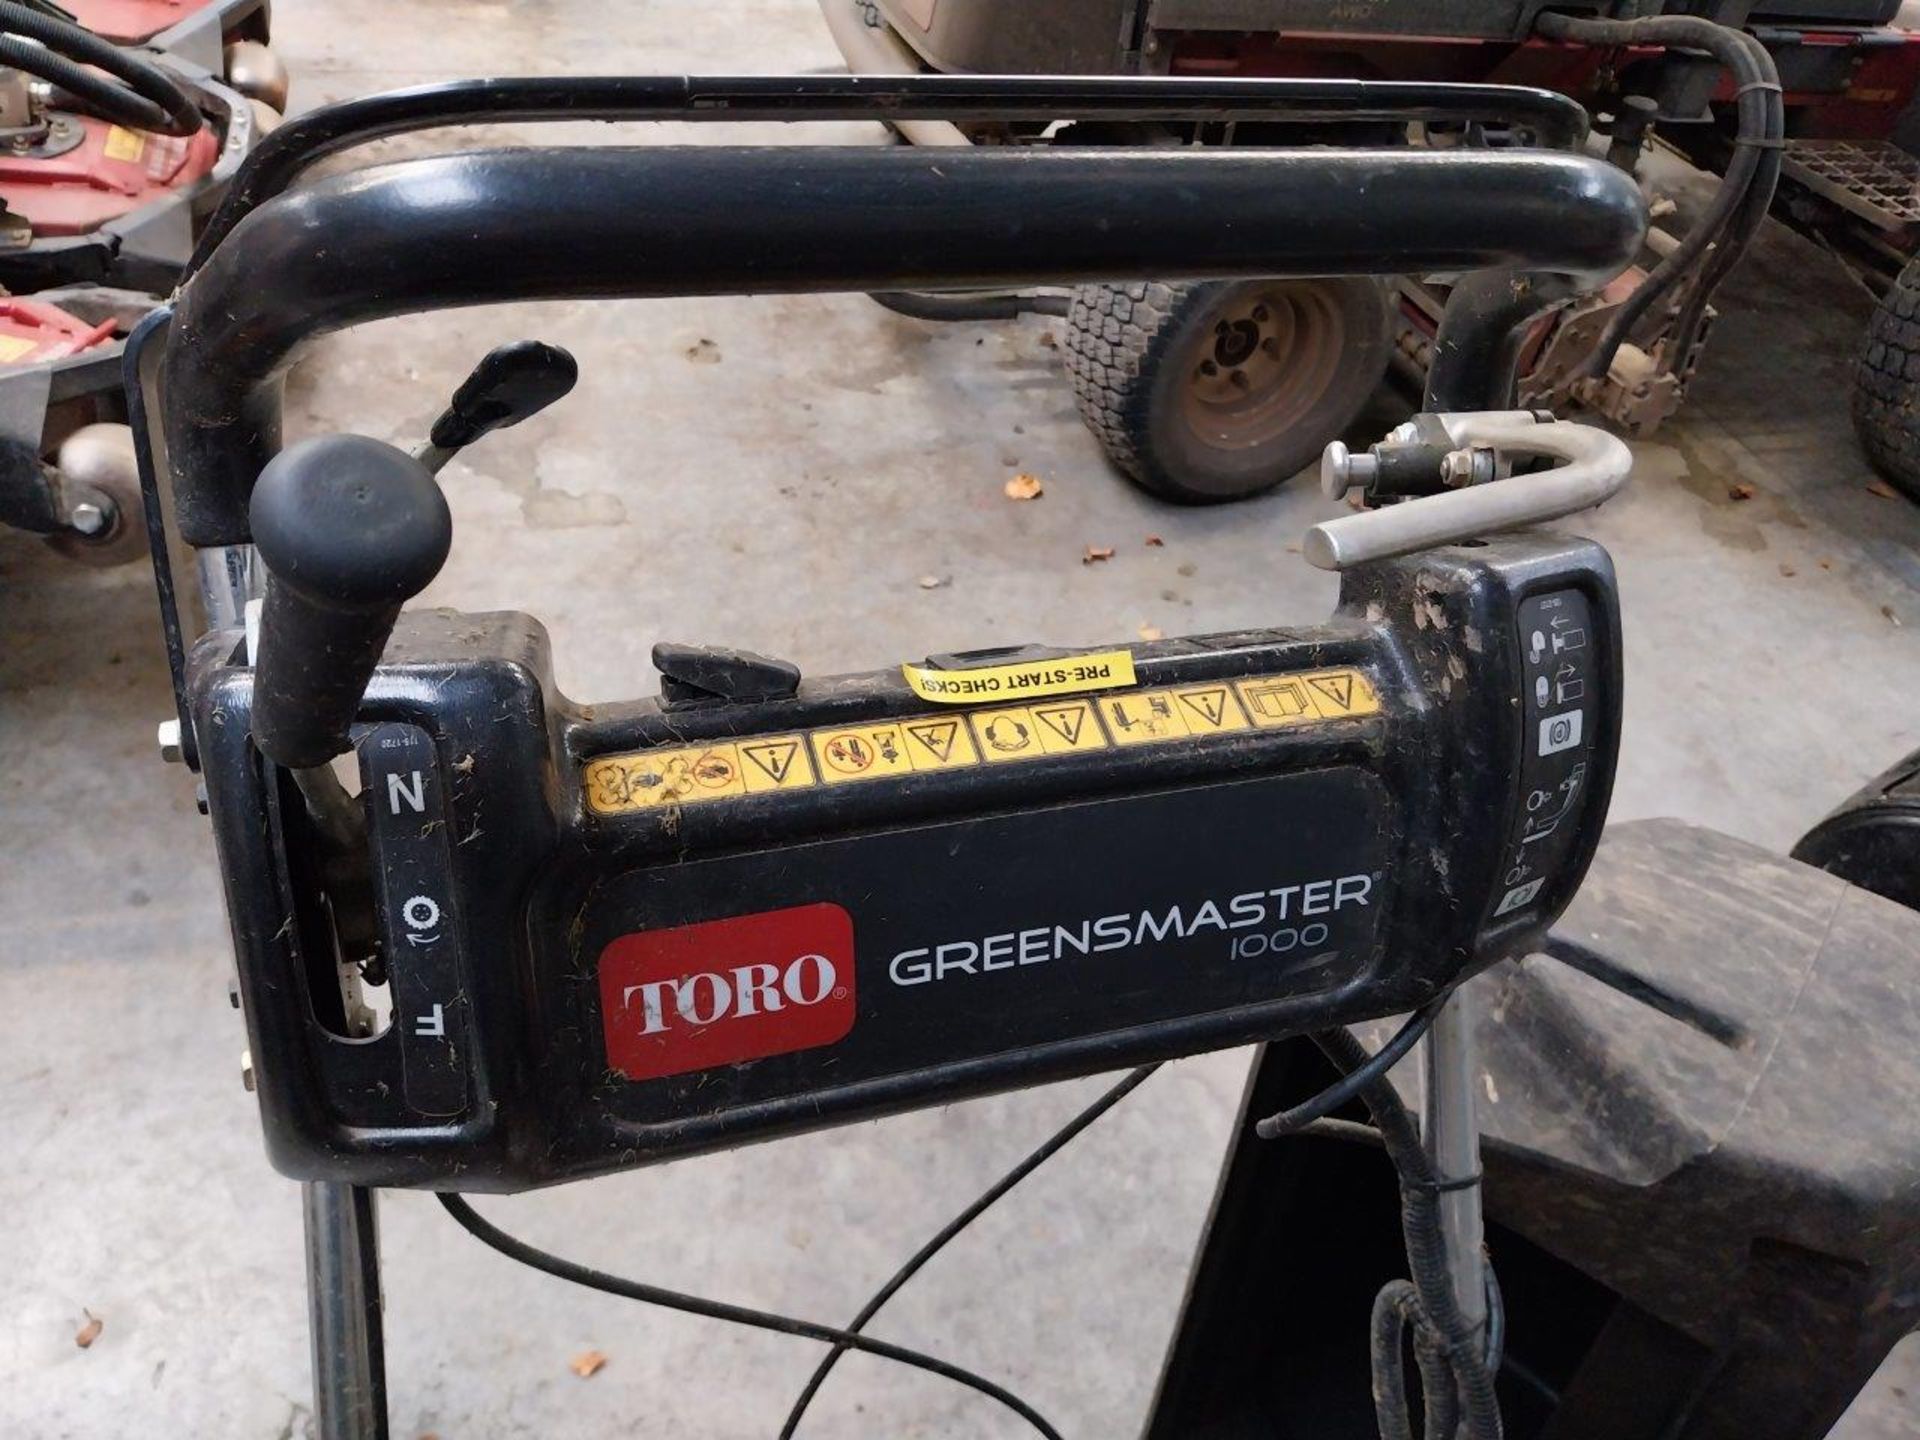 Toro Greensmaster 1000 pedestrian greens mower Mod - Image 3 of 5